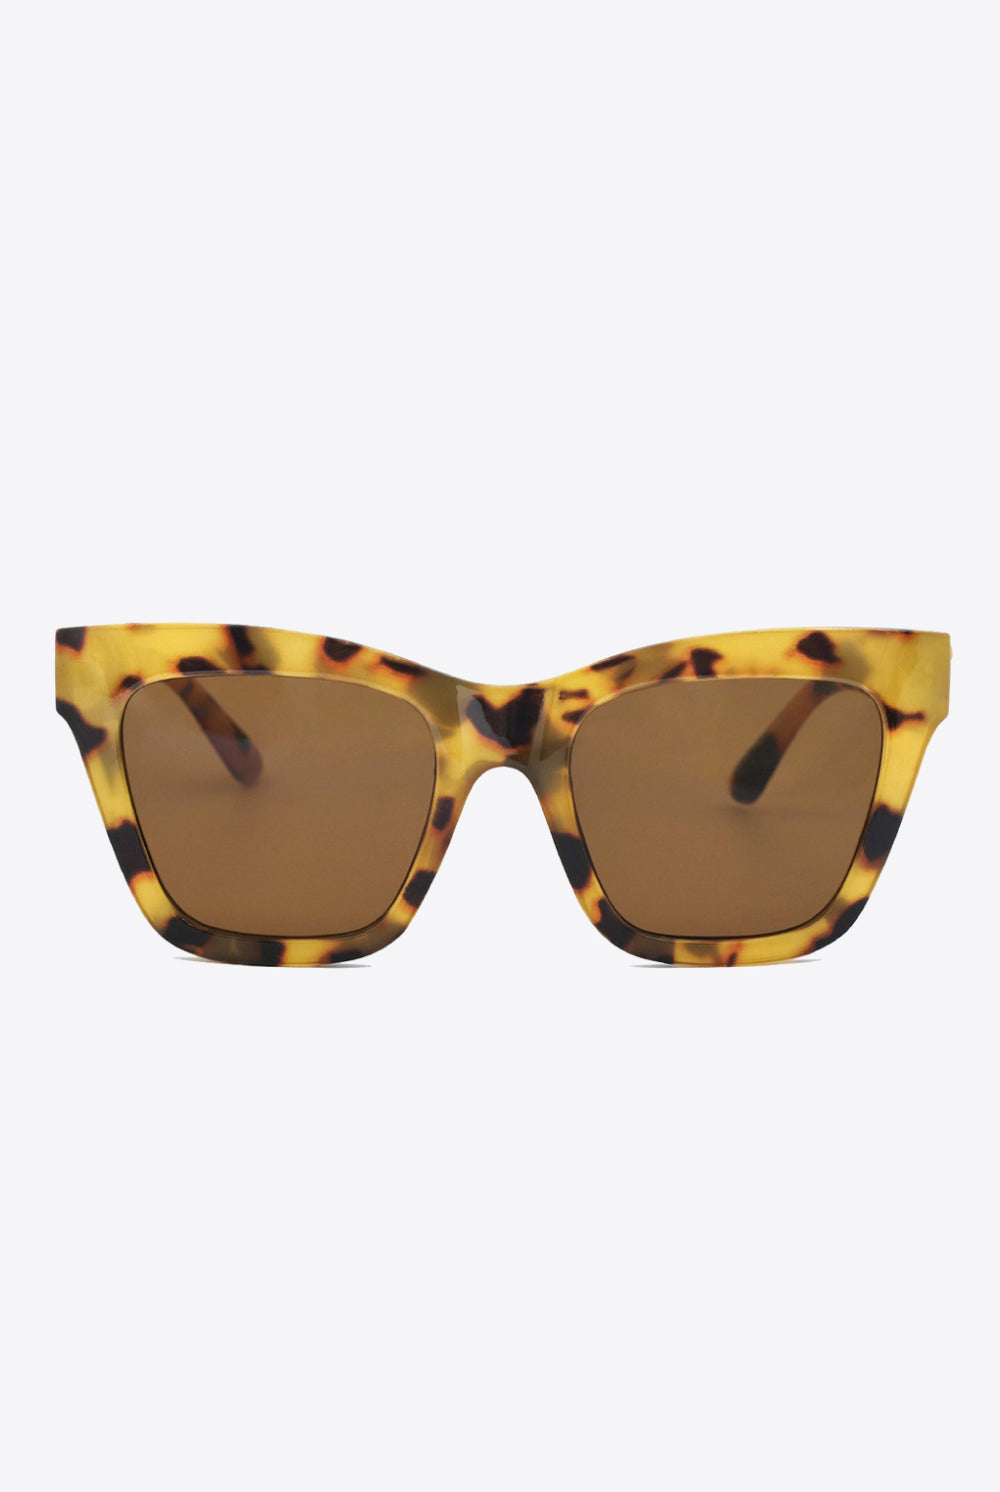 Sienna We Decided On Forever Acetate Lens UV400 Sunglasses Sunglasses